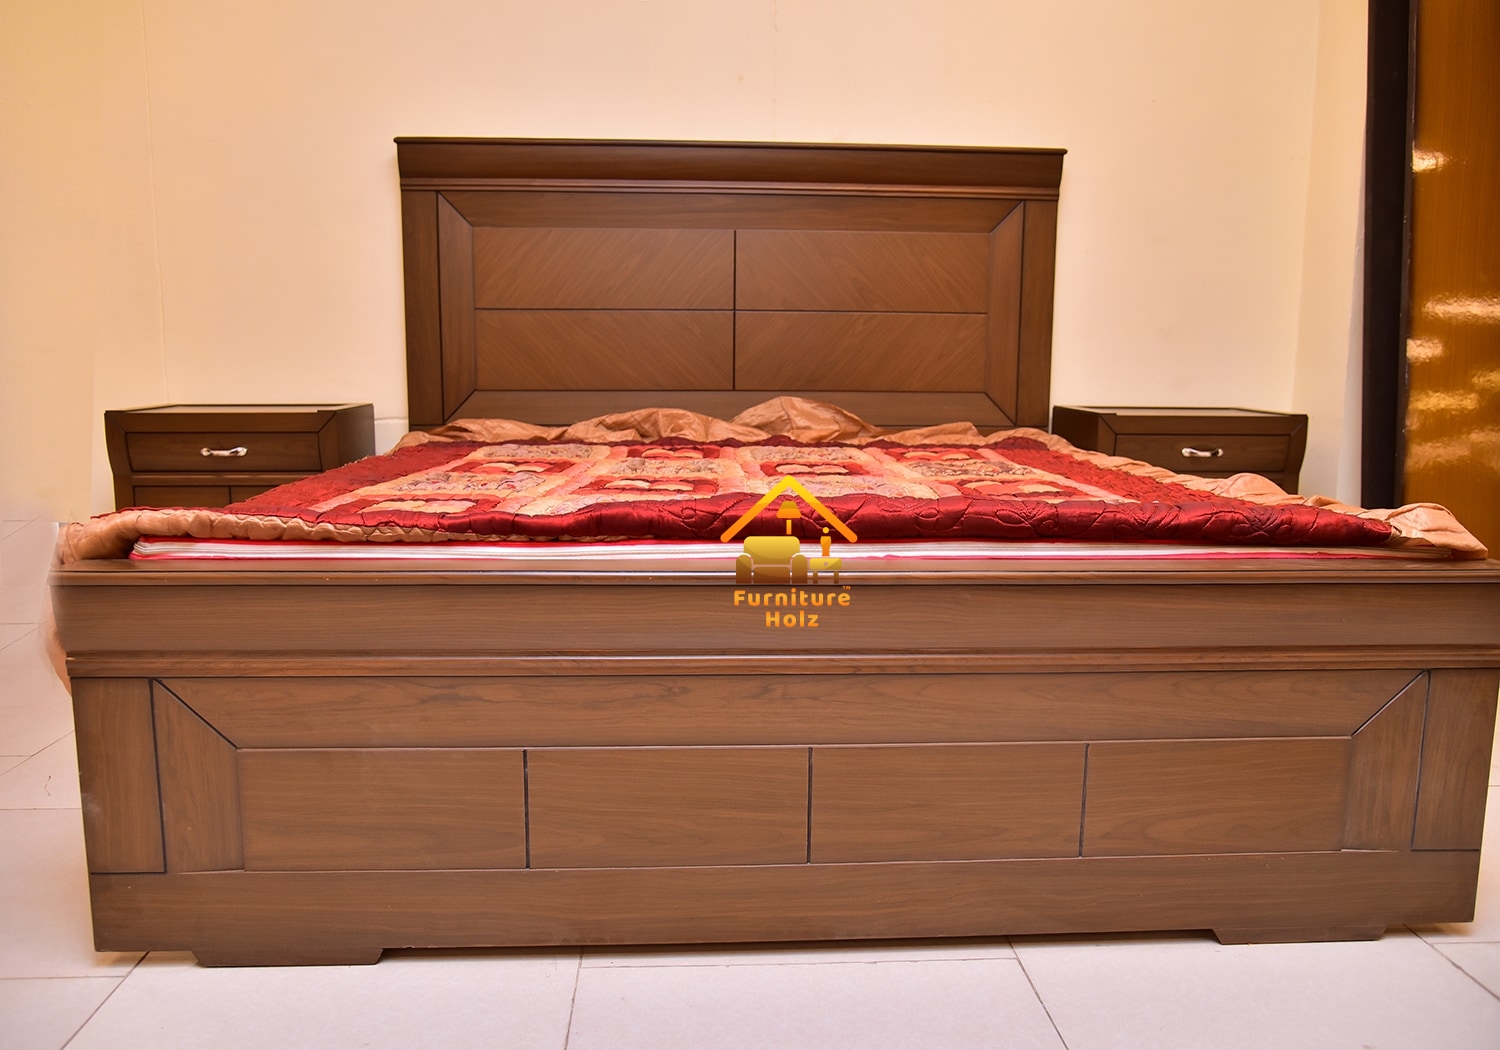 wood bedroom furniture price in pakistan